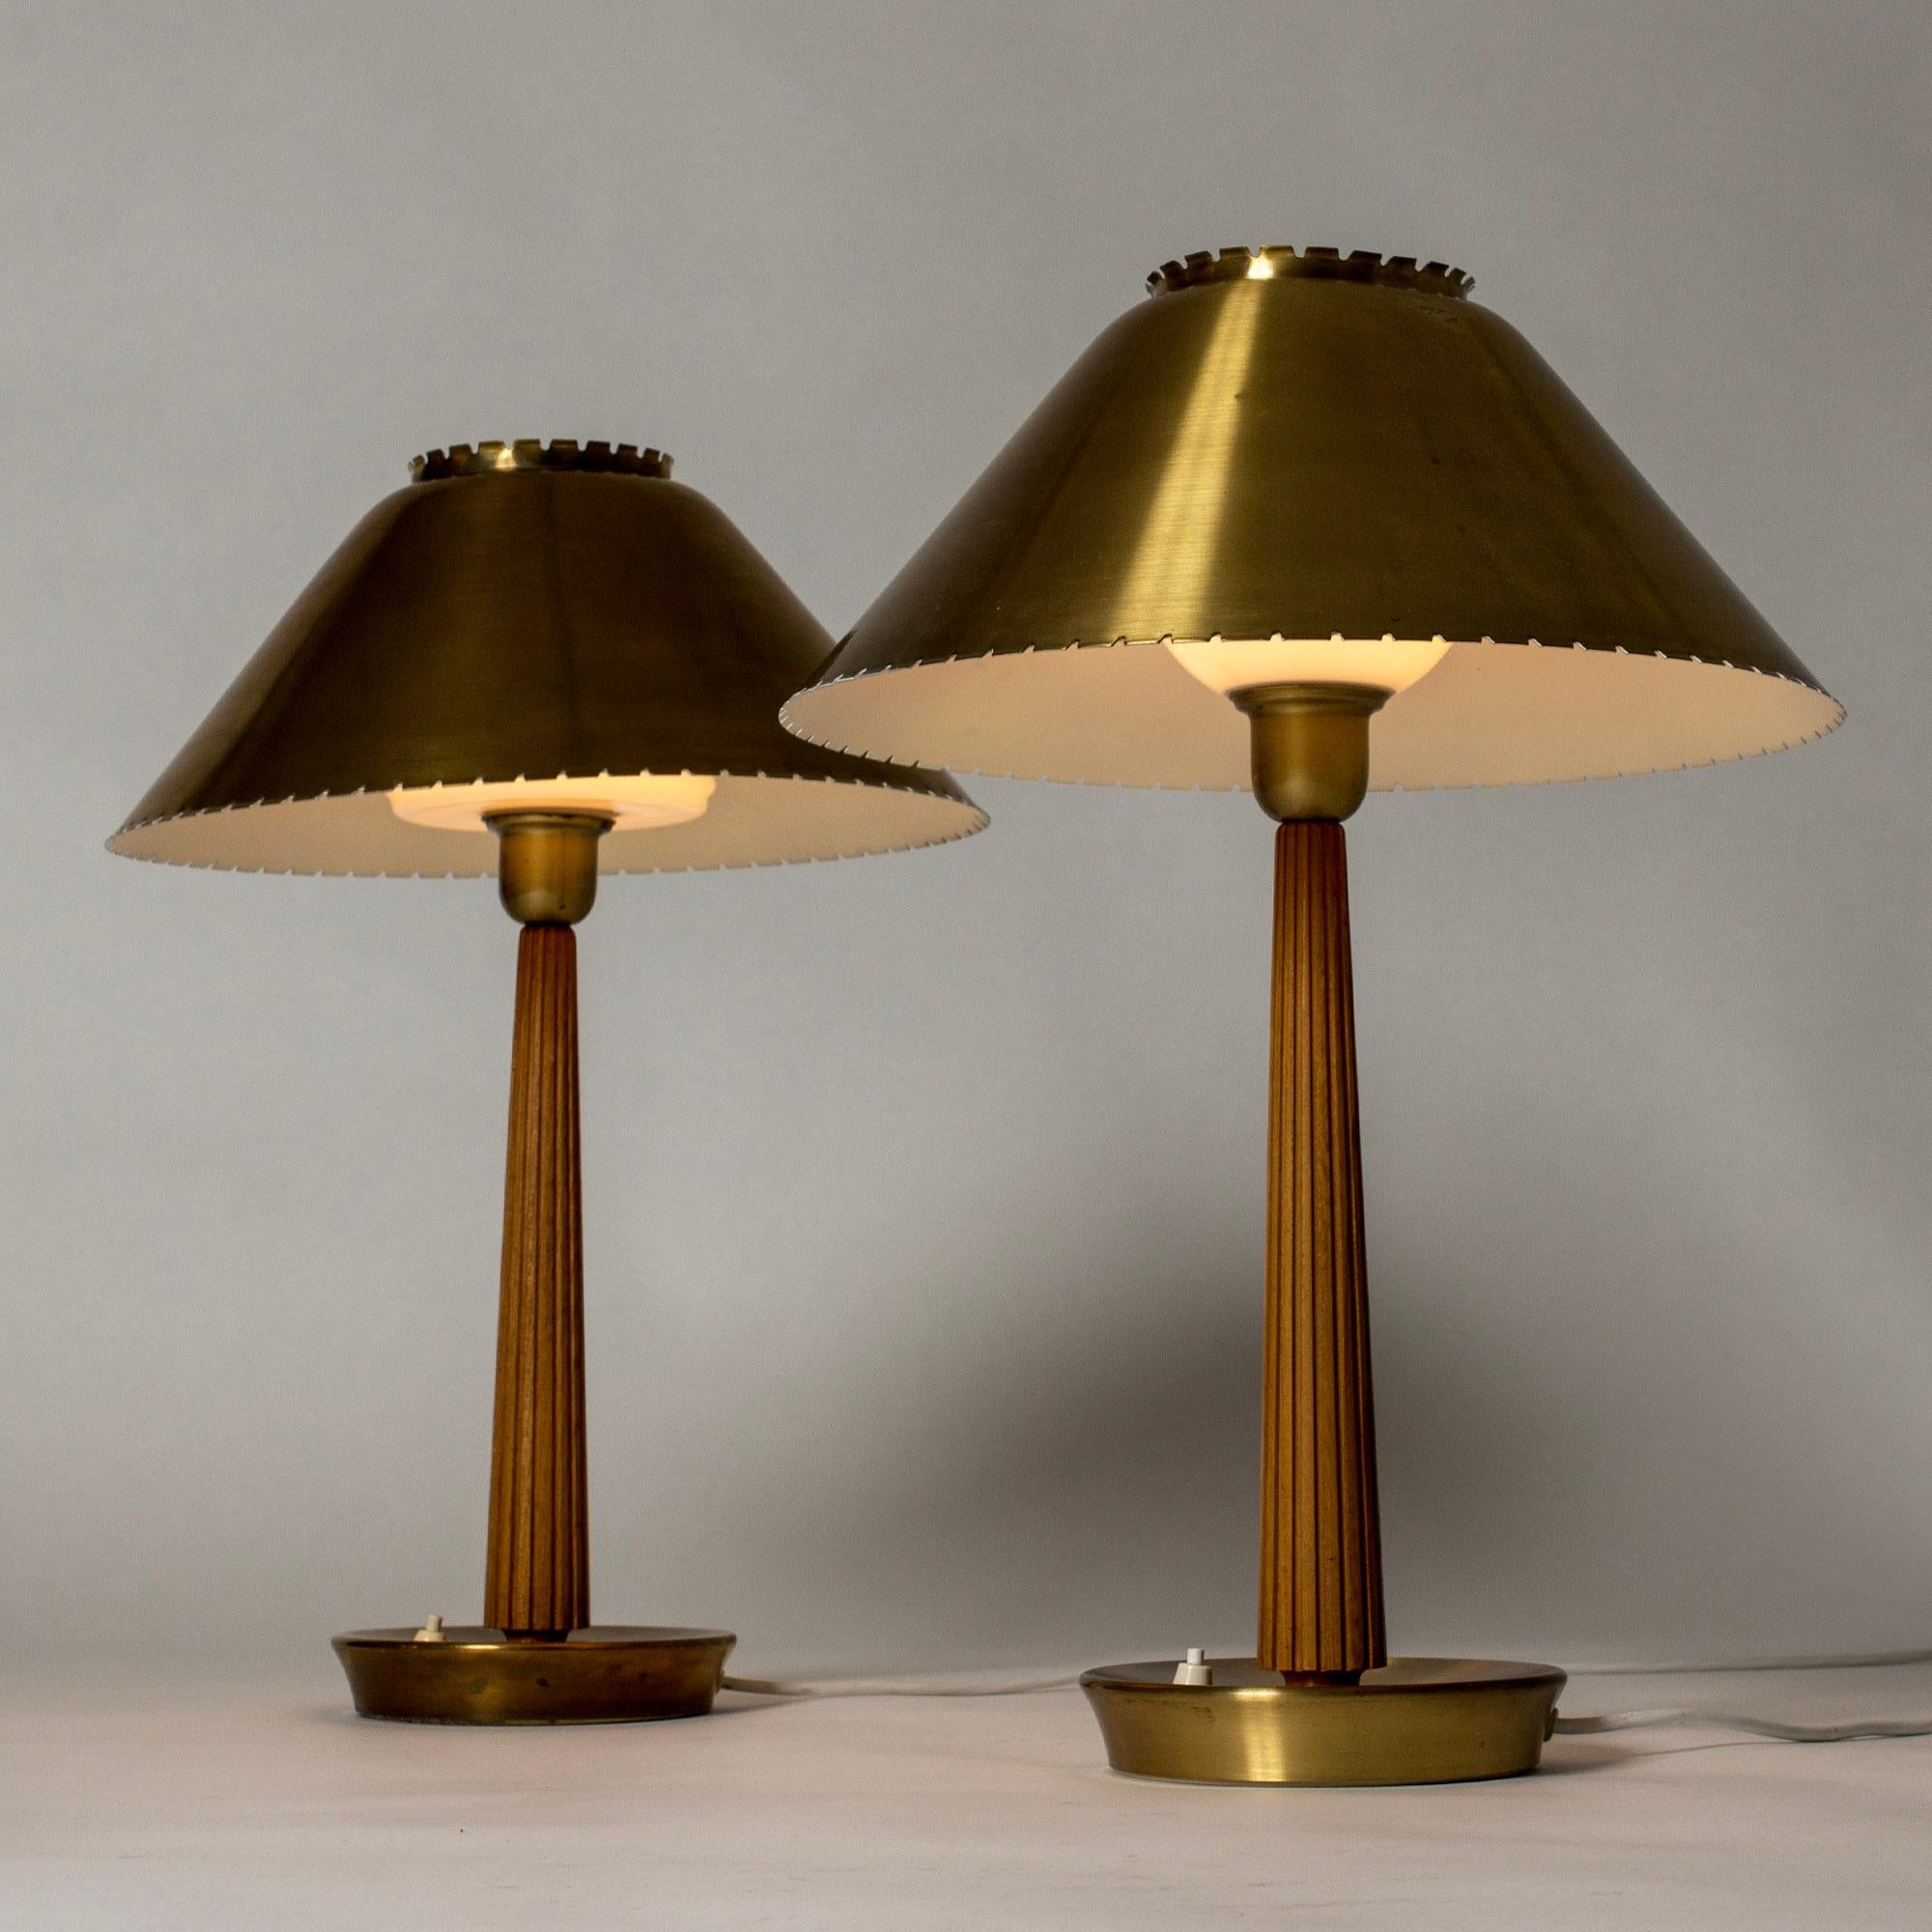 Scandinavian Modern Table Lamps, Hans Bergström, ASEA, Sweden, 1950s For Sale 1